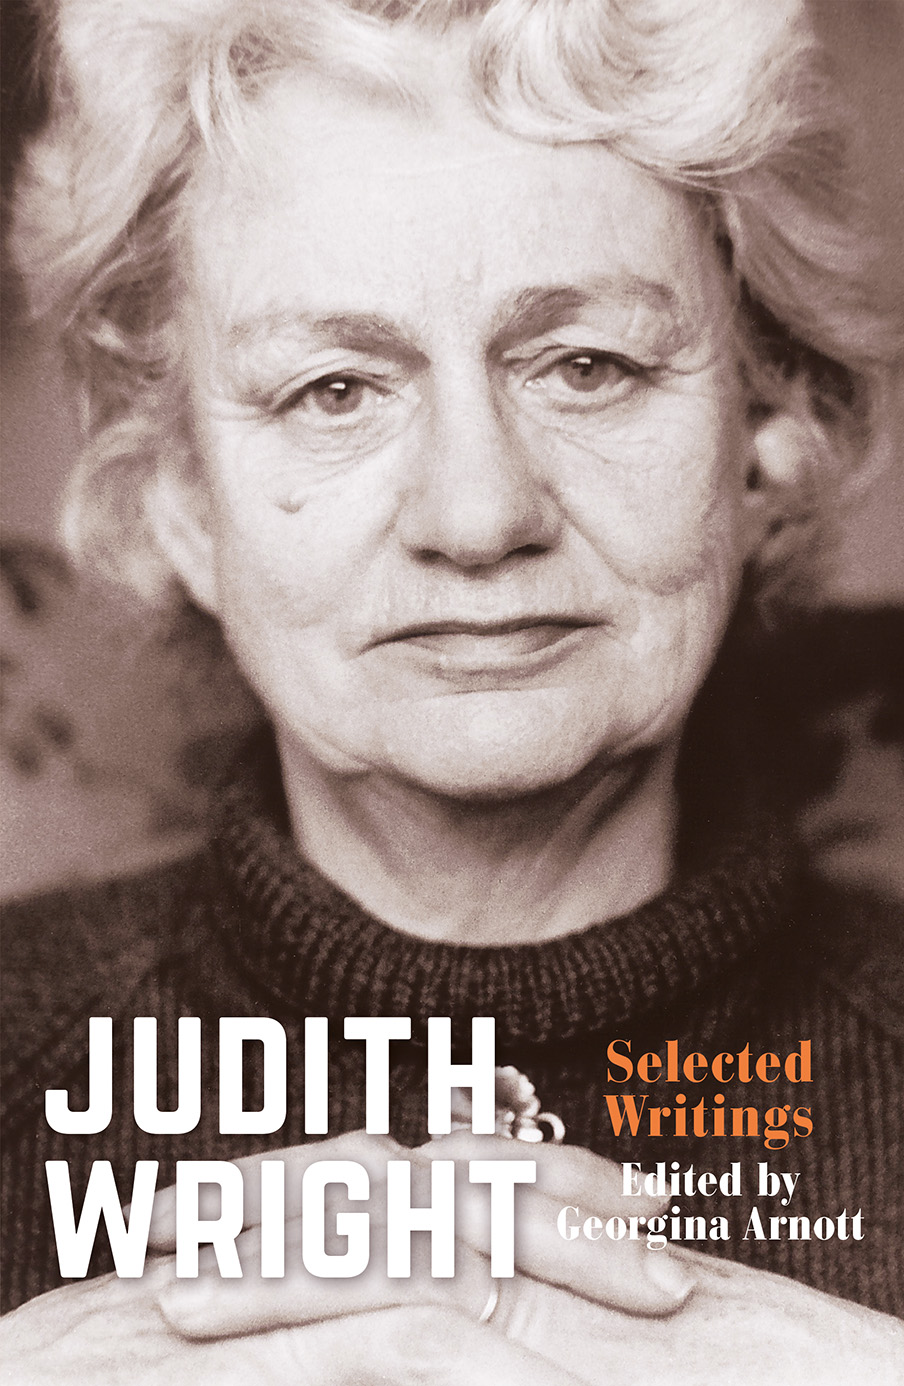 Judith Wright, edited by Georgina Arnott